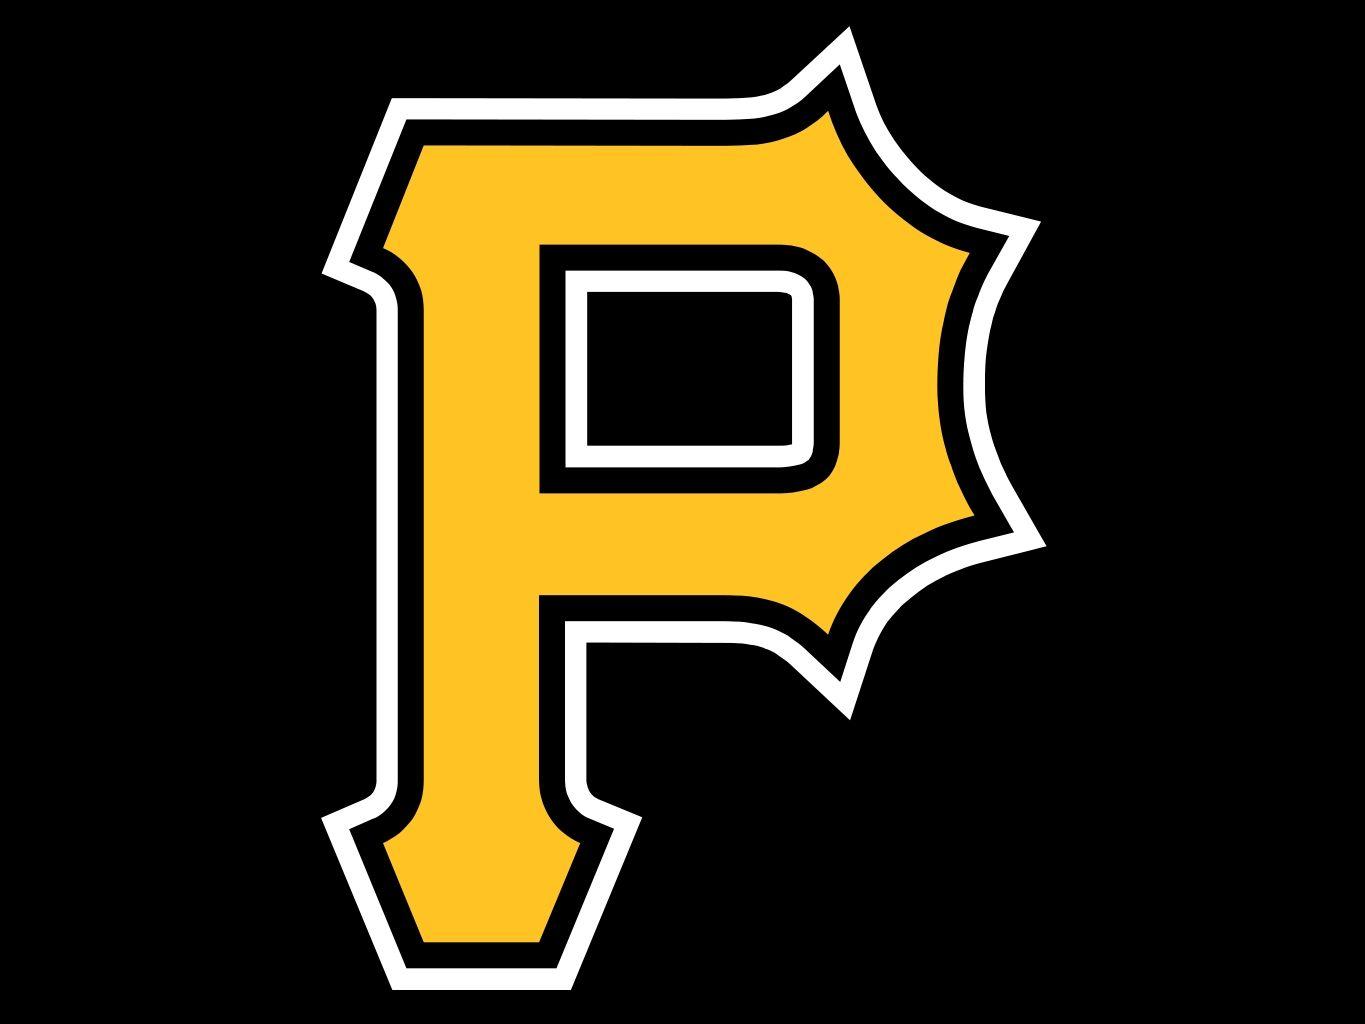 Pittsburgh Pirates P Logo - Pittsburgh Pirates Concept Stadium: The Pirate Ship